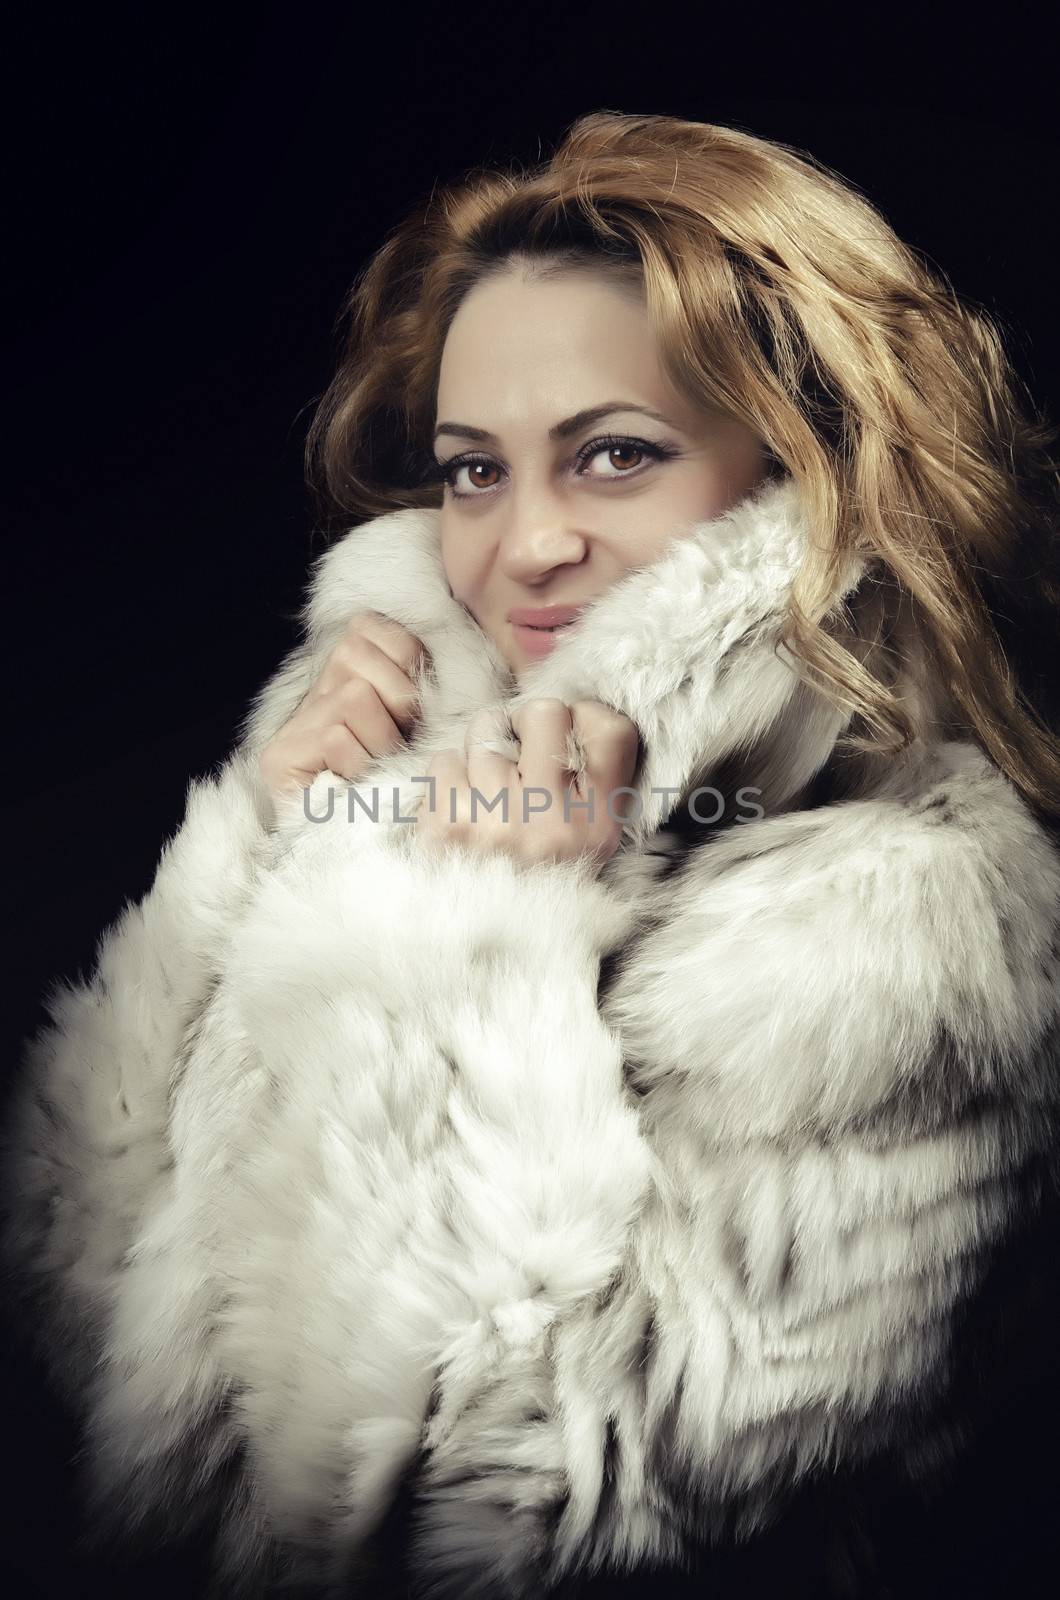 Model dressed in a fur coat smilling at camera